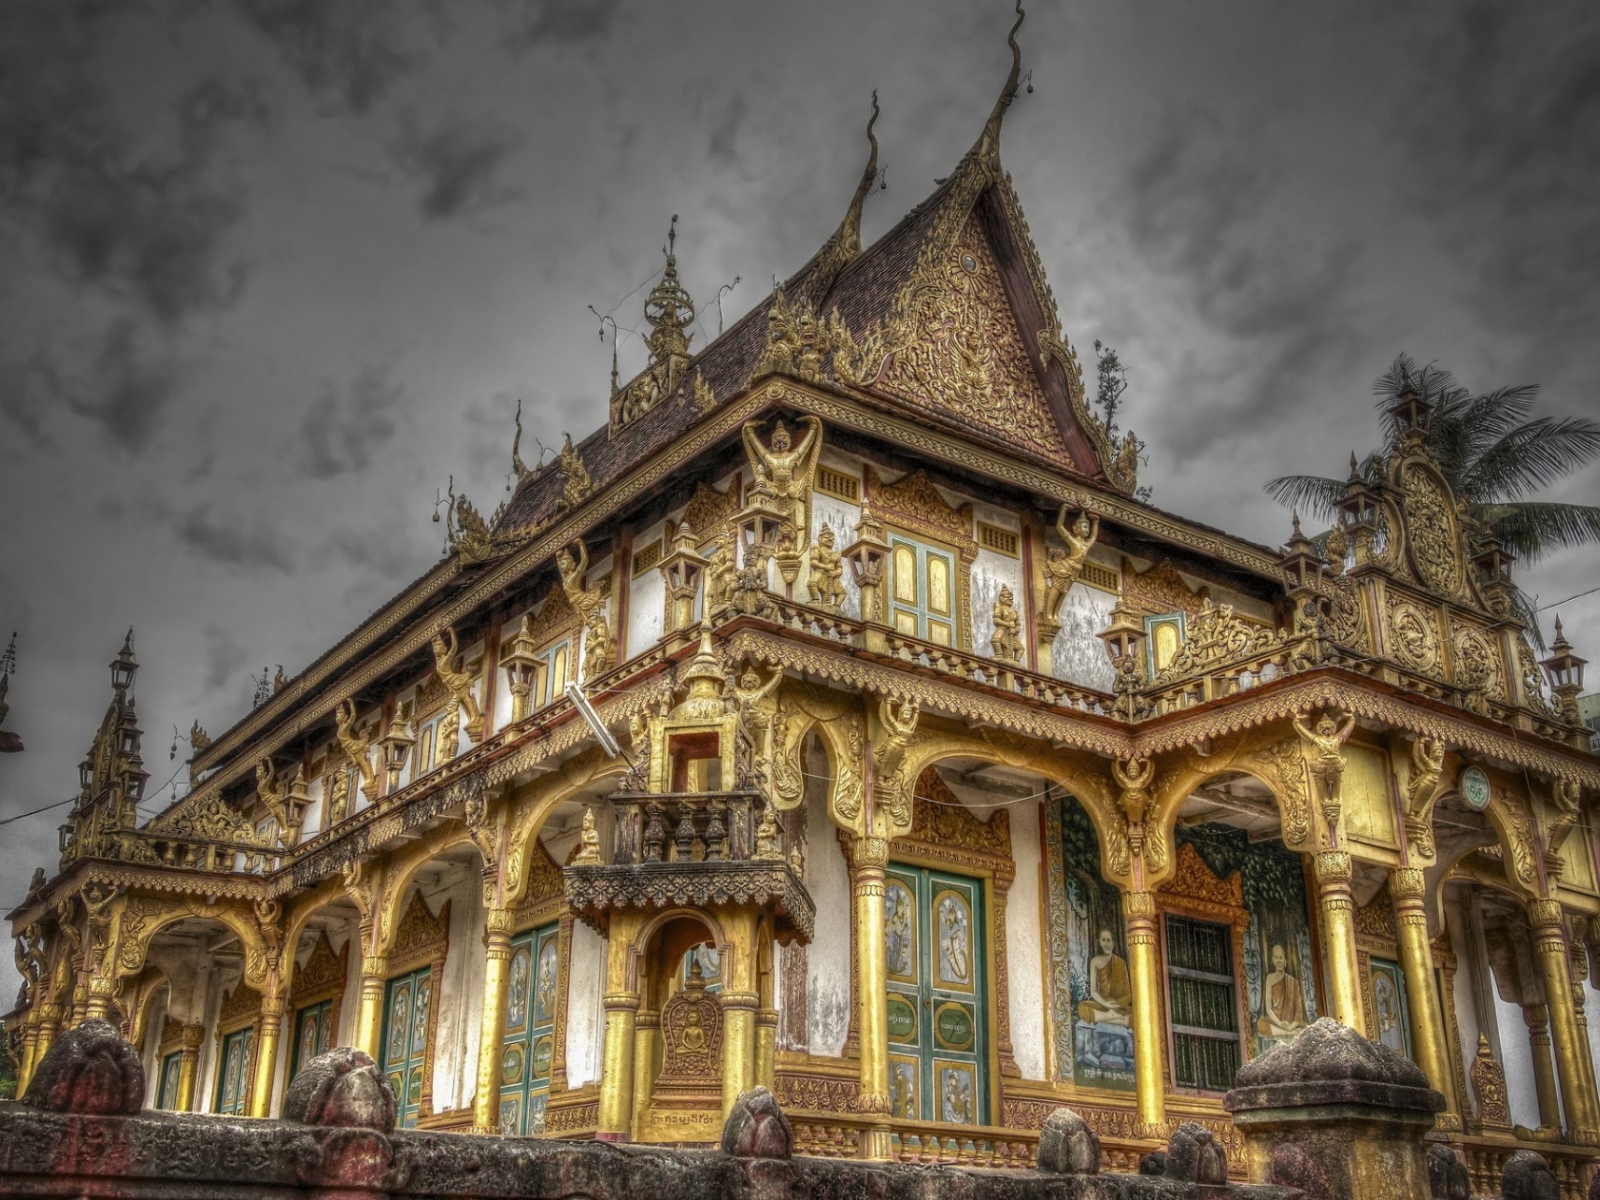 Храм в городе Пномпень, Камбоджа 